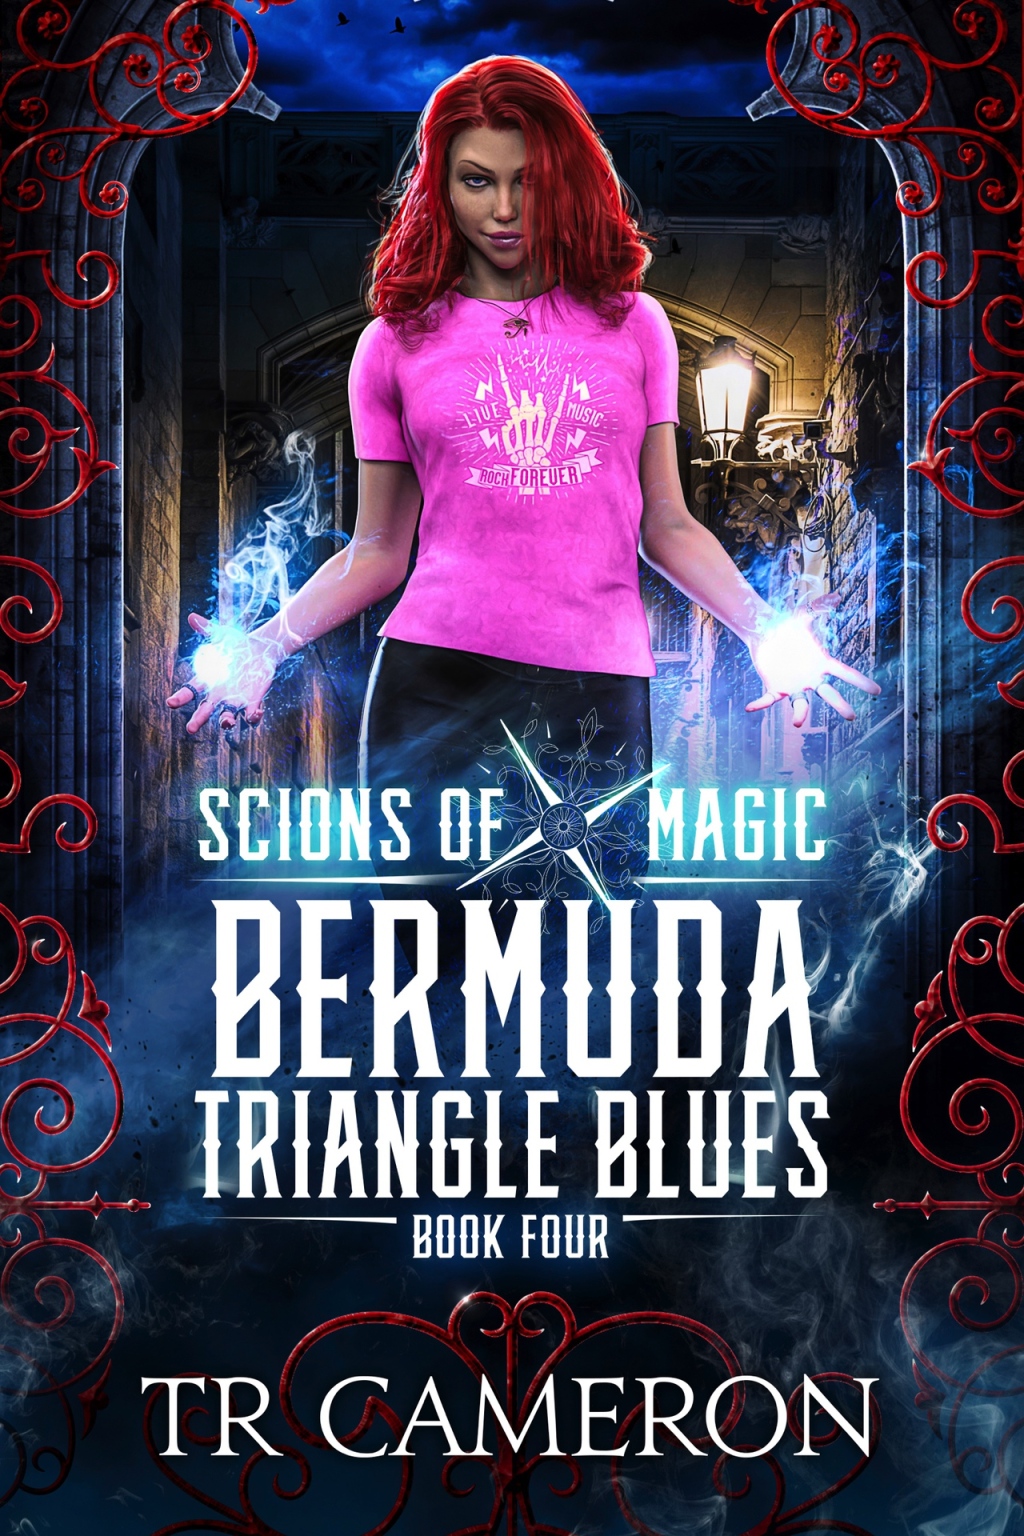 Bermuda Triangle Blues – Pretty average urban fantasy. – PG's Ramblings